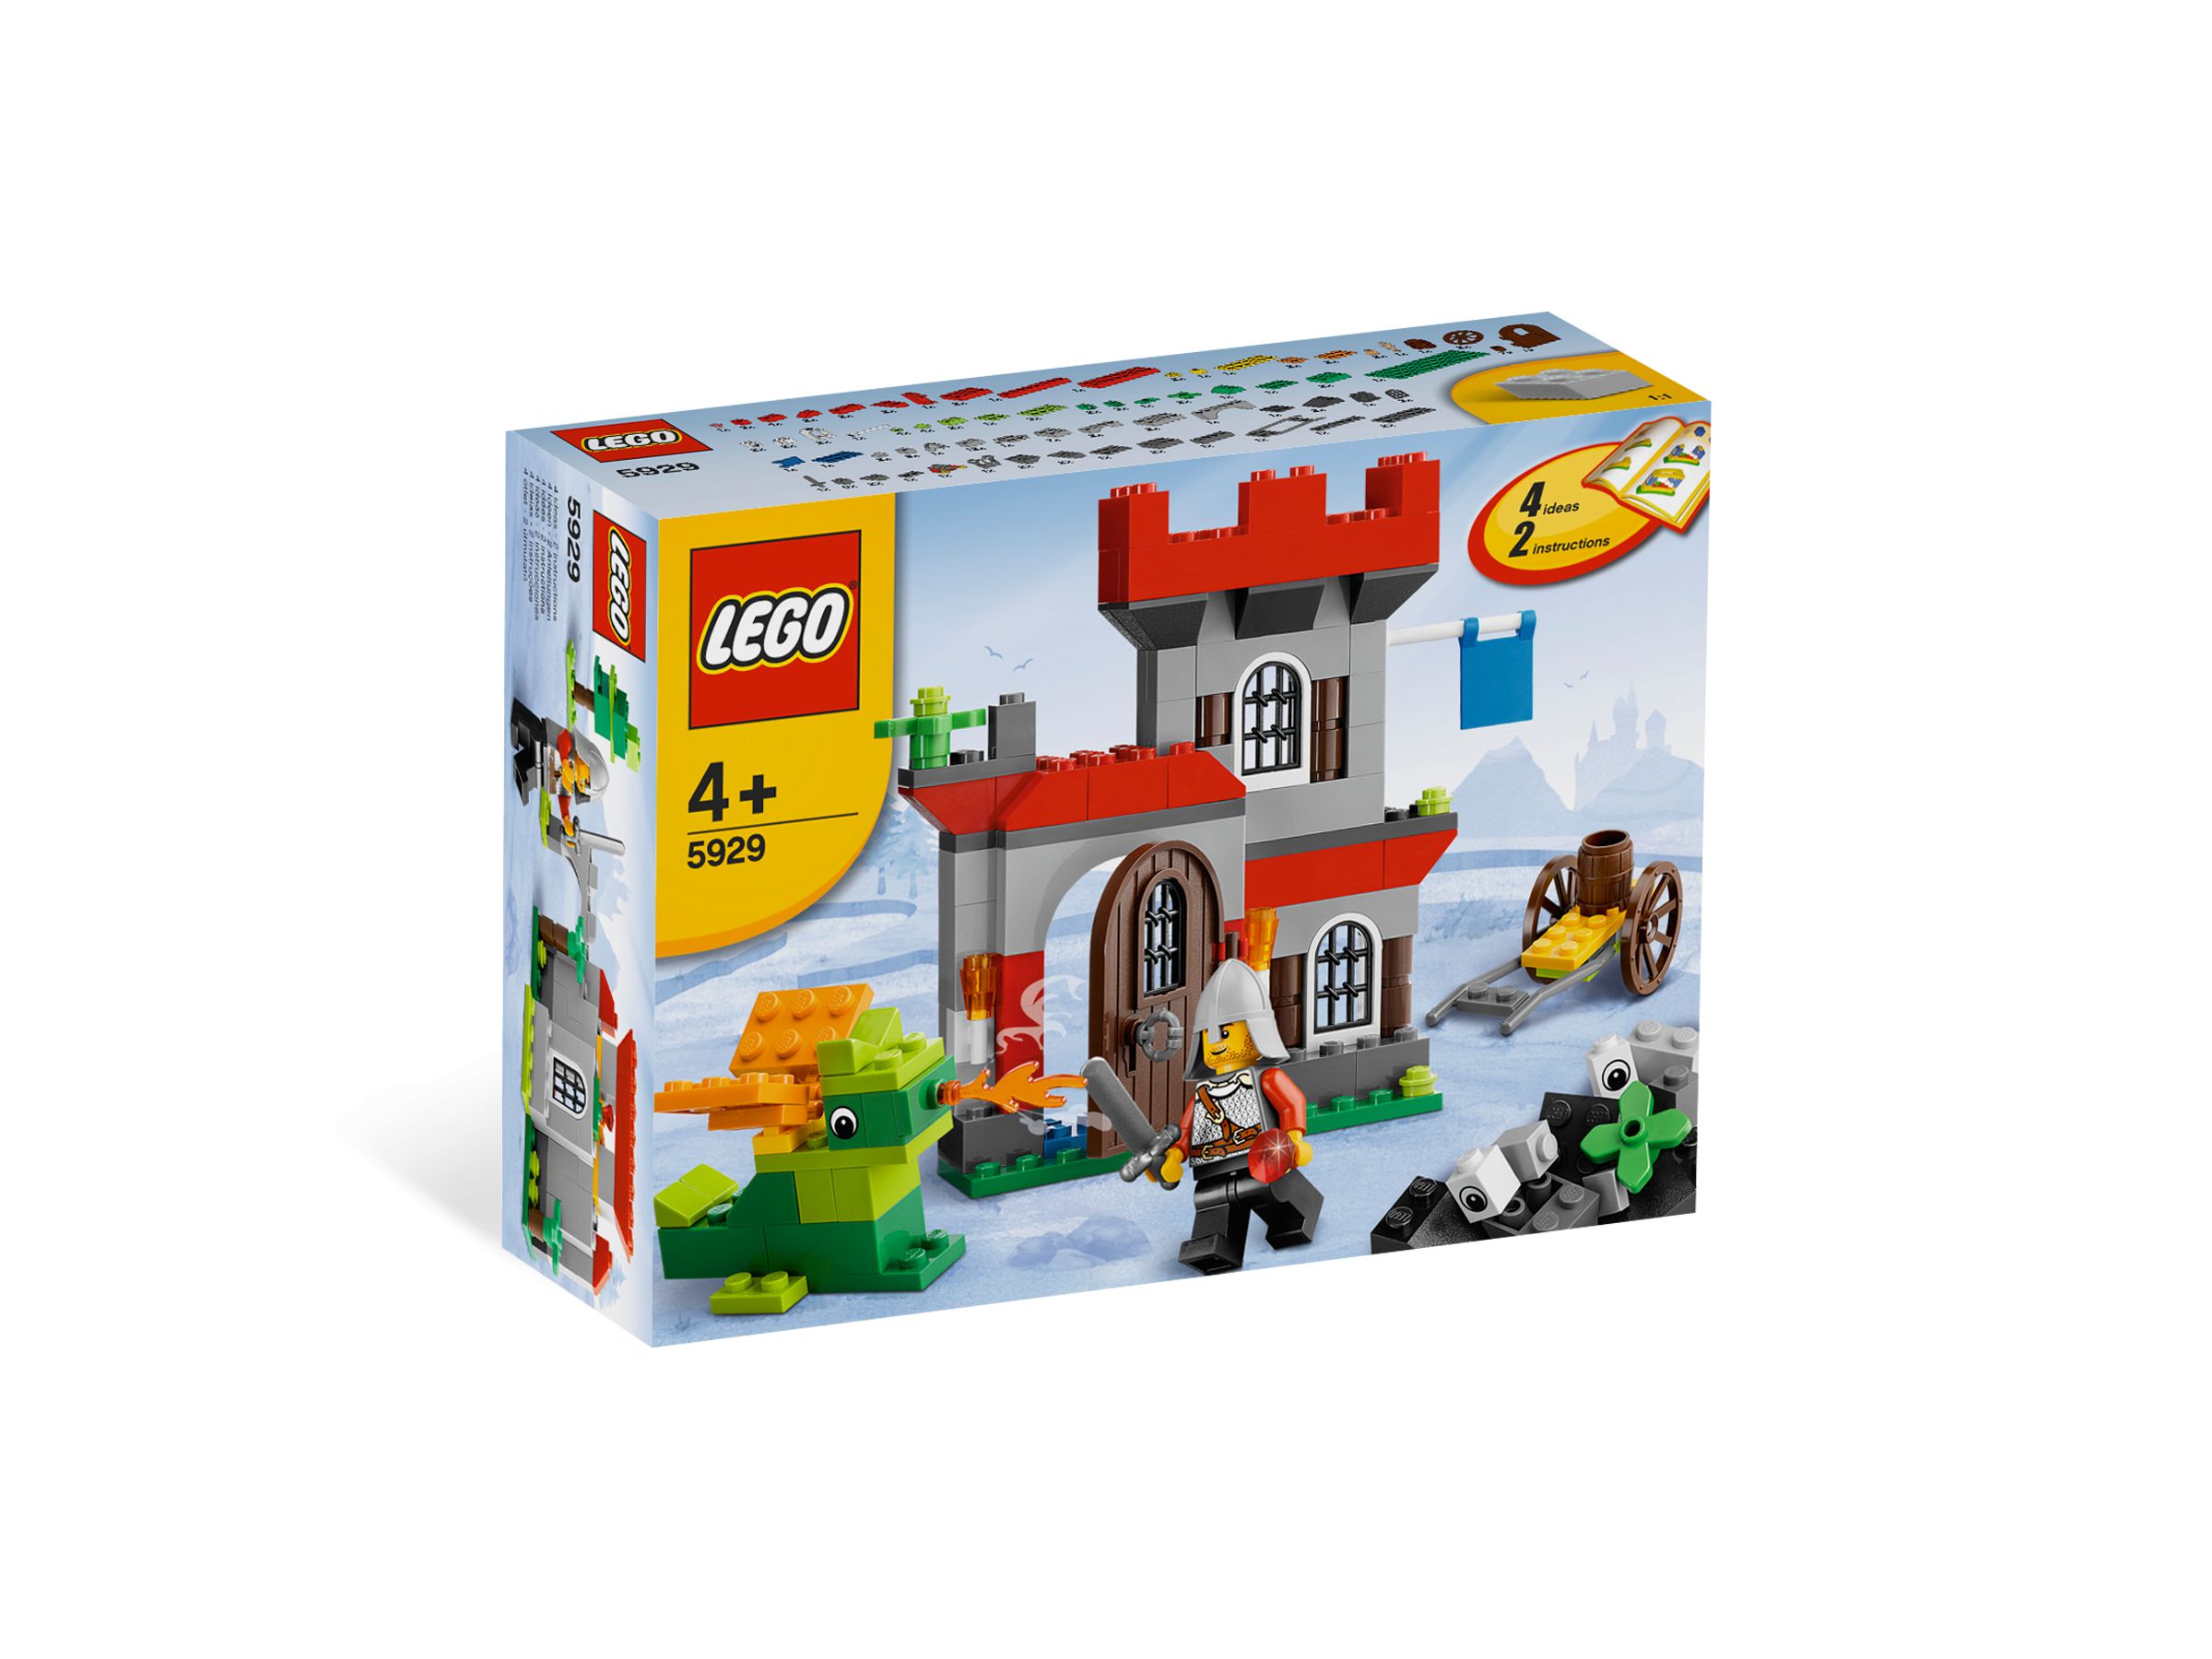 LEGO Bricks and More 5929 Bausteine Burg LEGO_5929_alt1.jpg